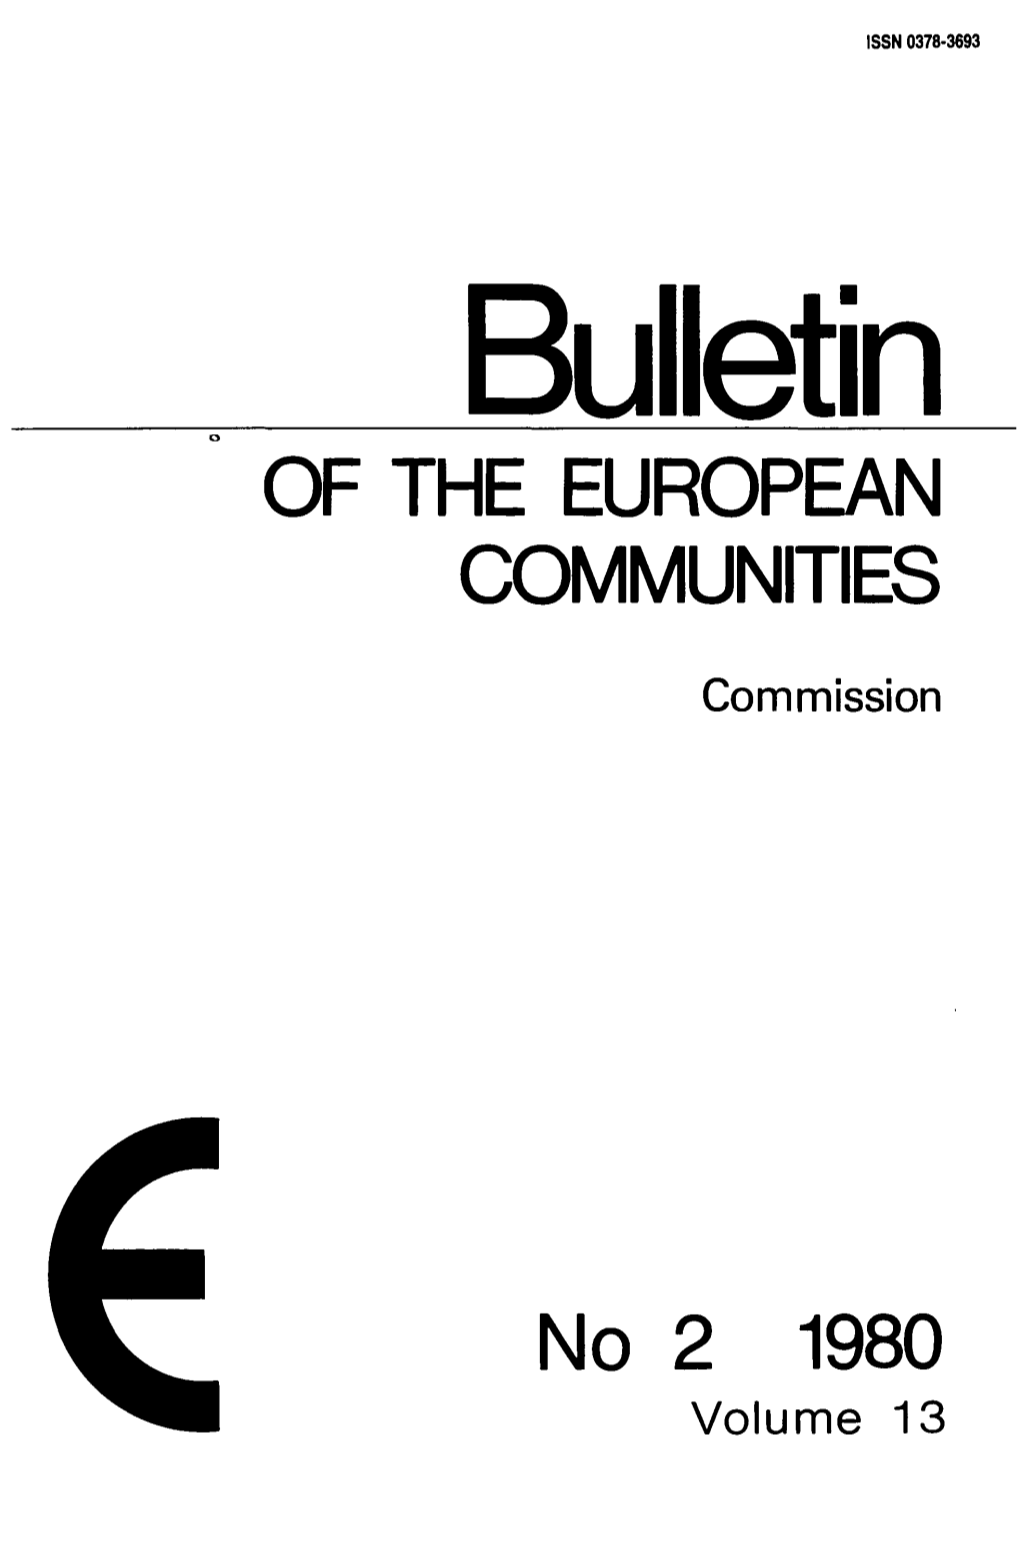 Bulletin of the EUROPEAN COMMUNITIES